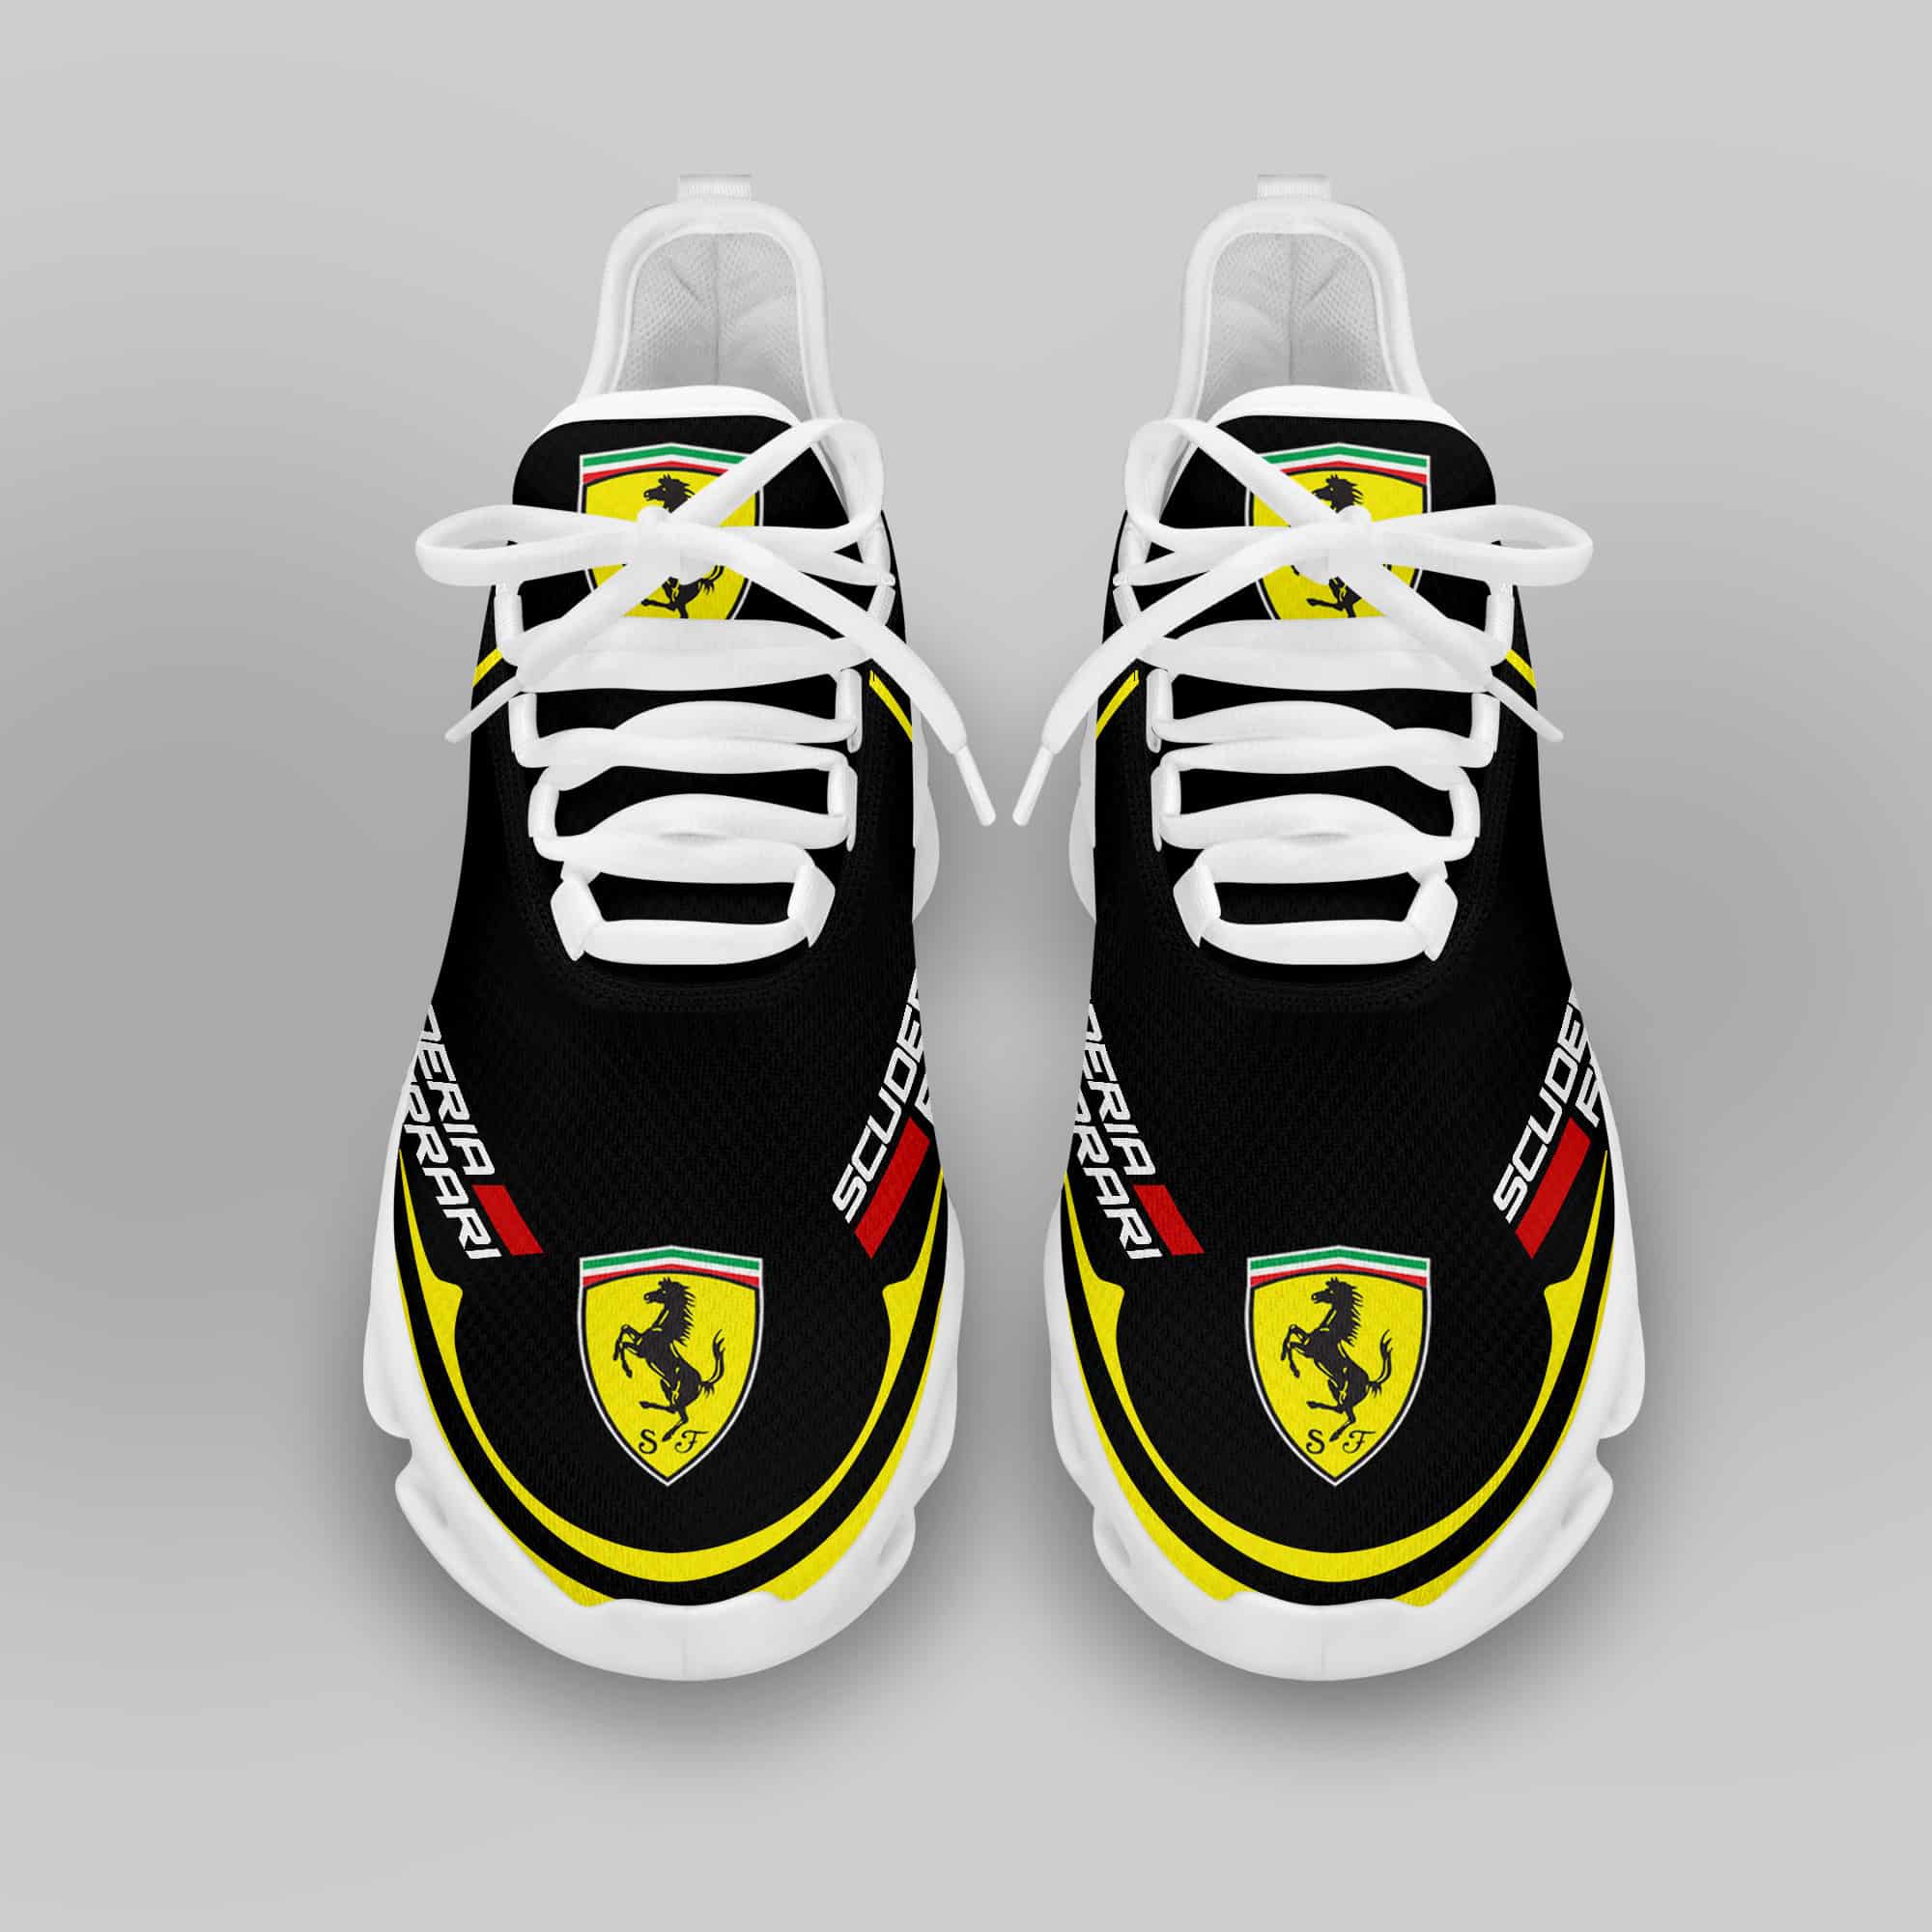 Ferrari Sneaker Running Shoes Max Soul Shoes Sneakers Ver 26 3